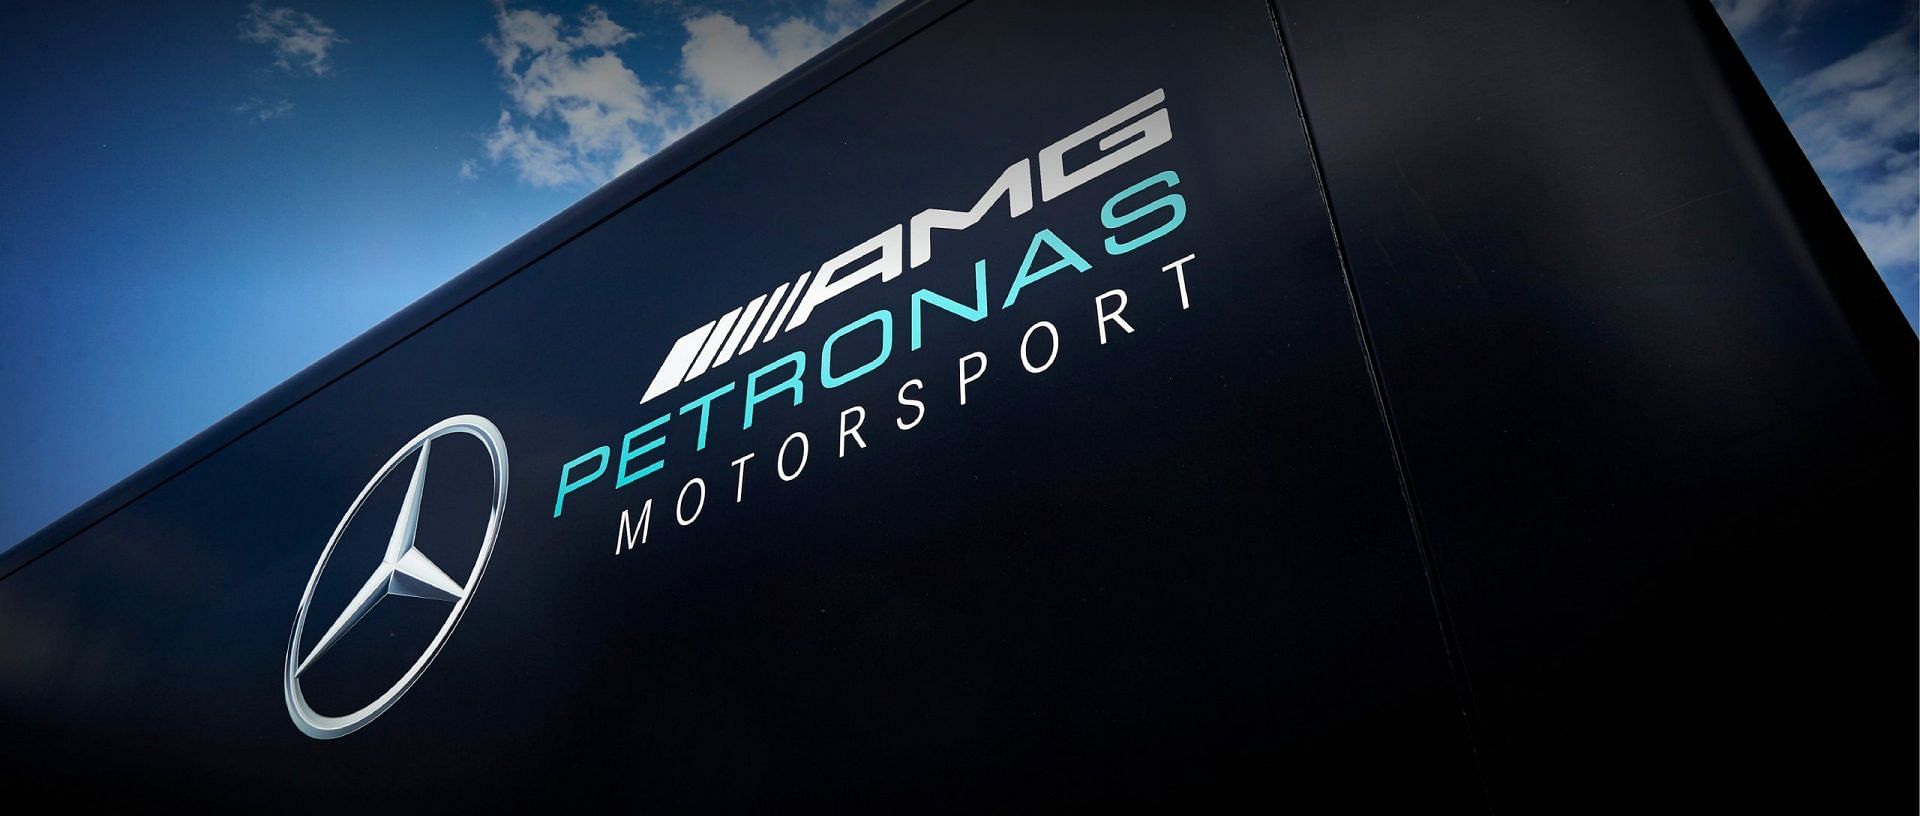 The Mercedes AMG Petronas F1 Team HQ Source: Mercedes Pressroom